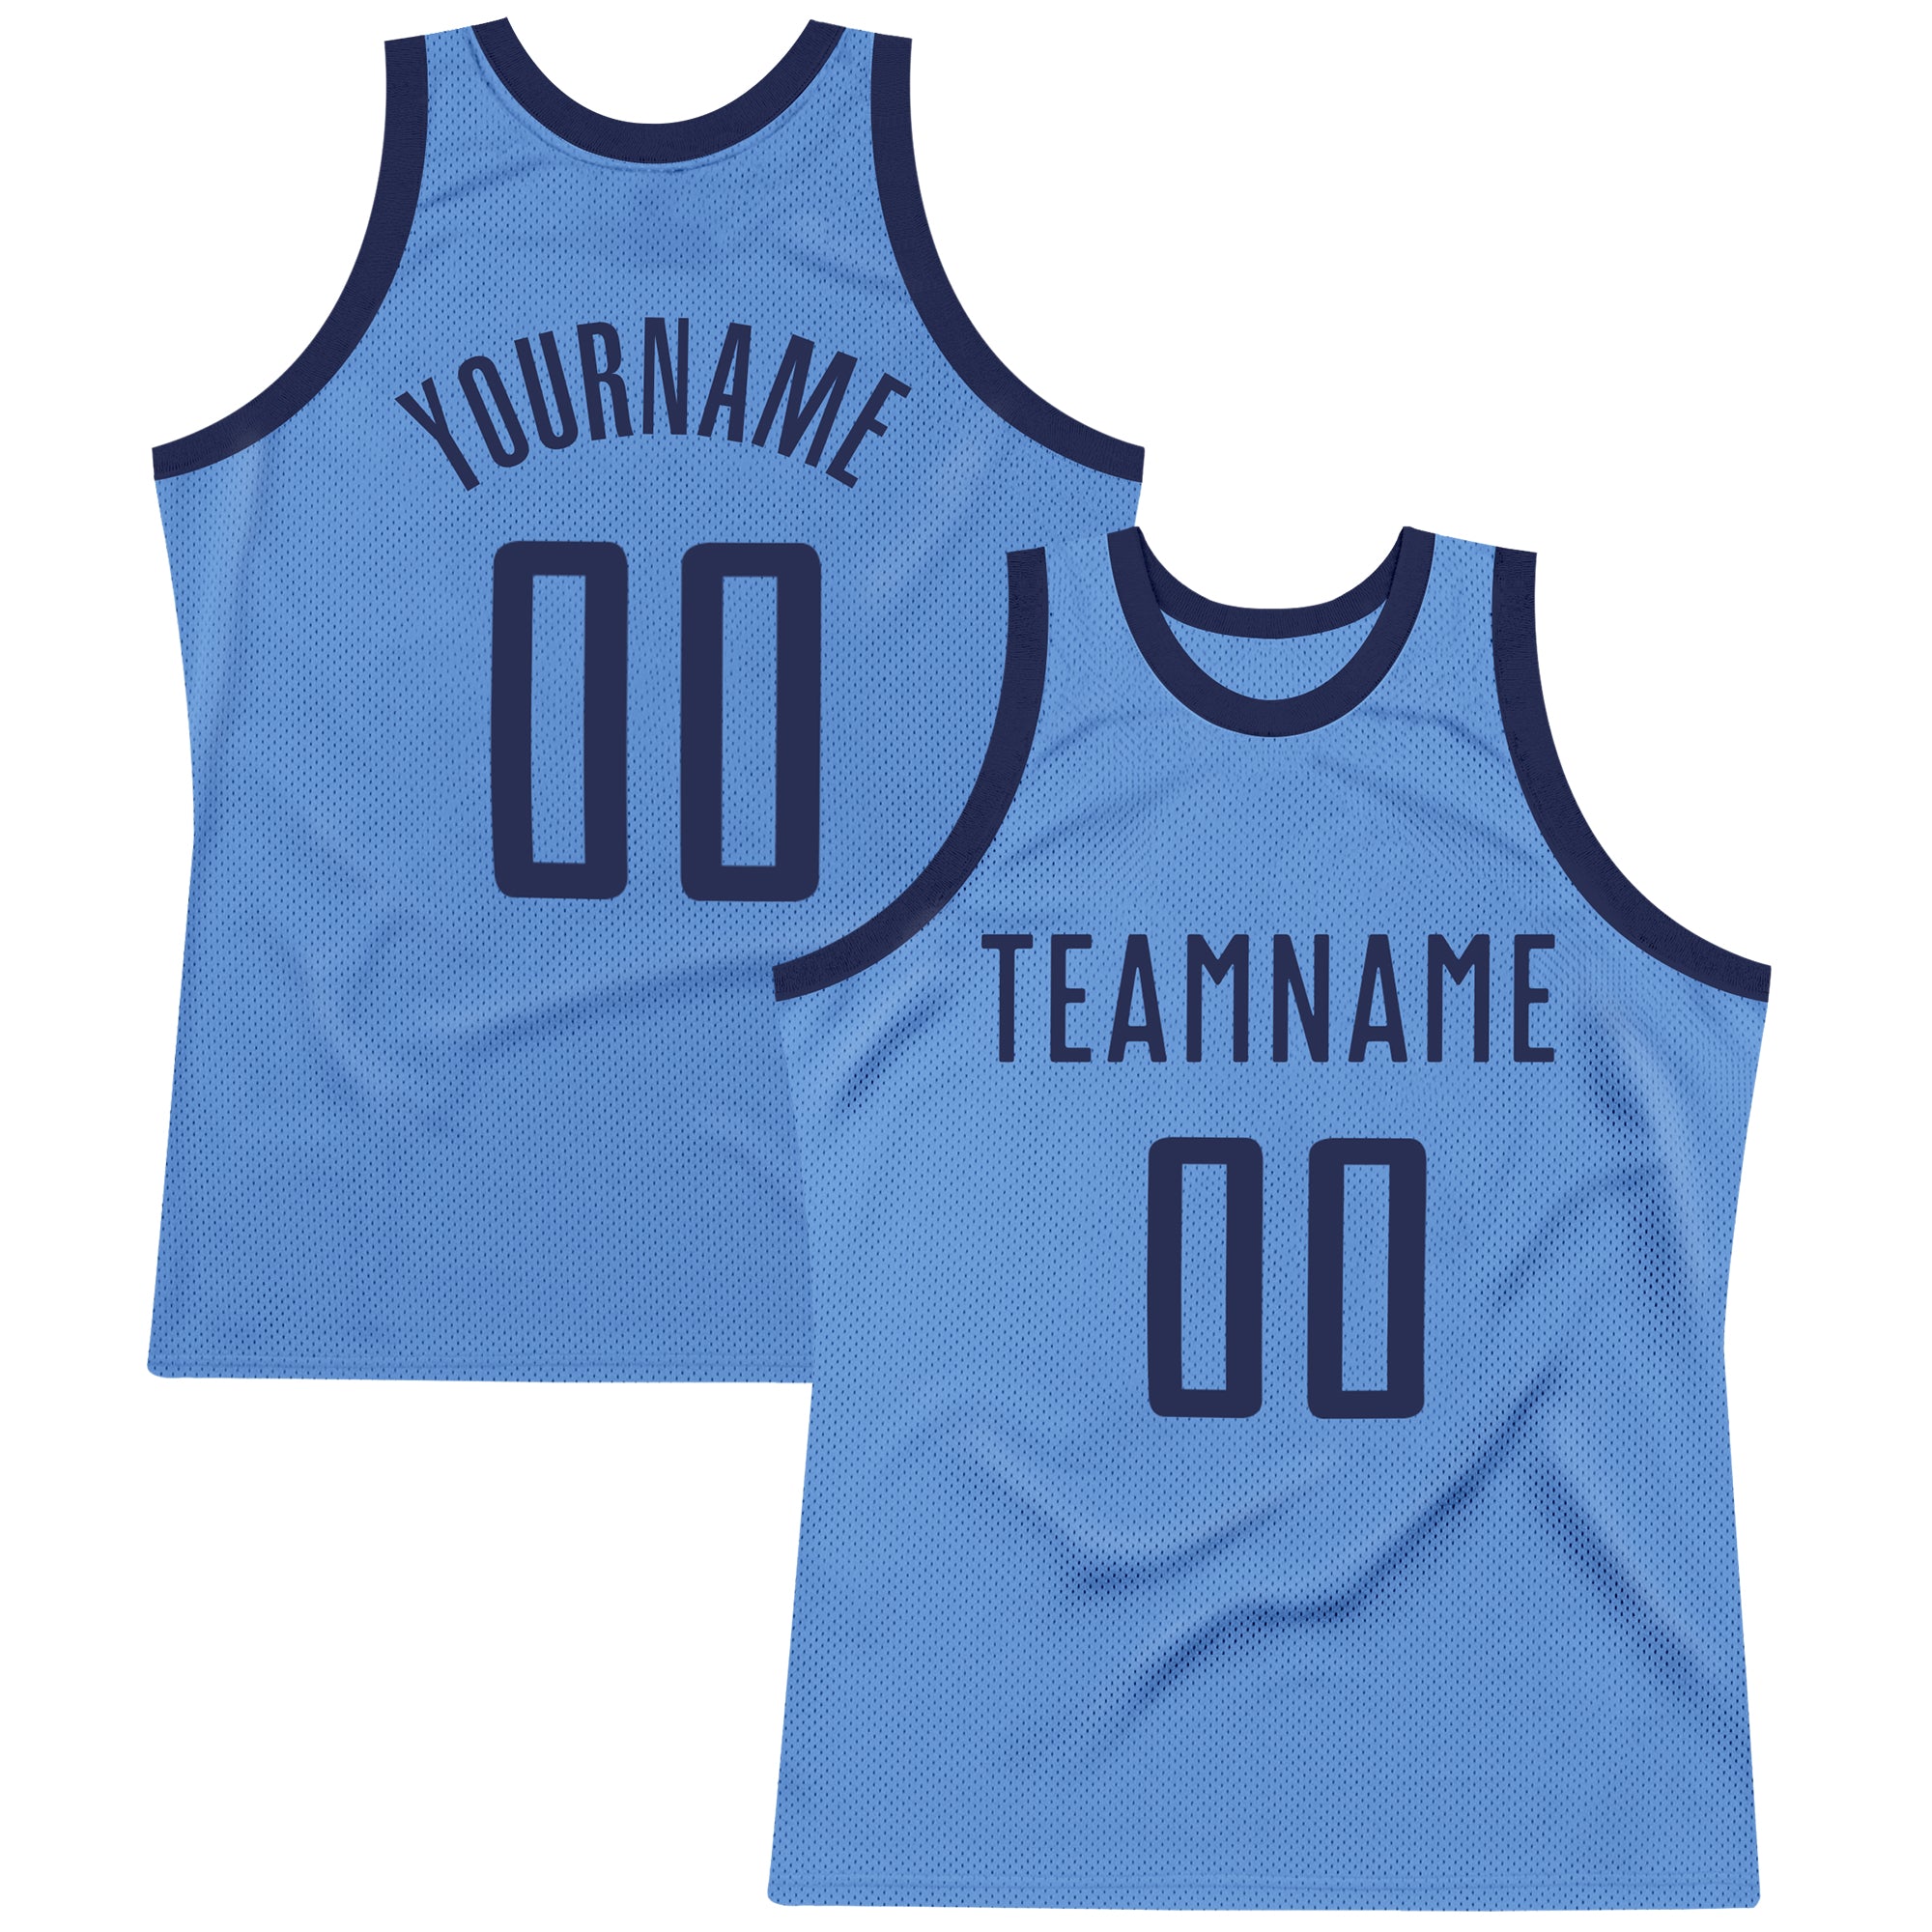 Wholesale basketball uniform color sky blue For Comfortable Sportswear 